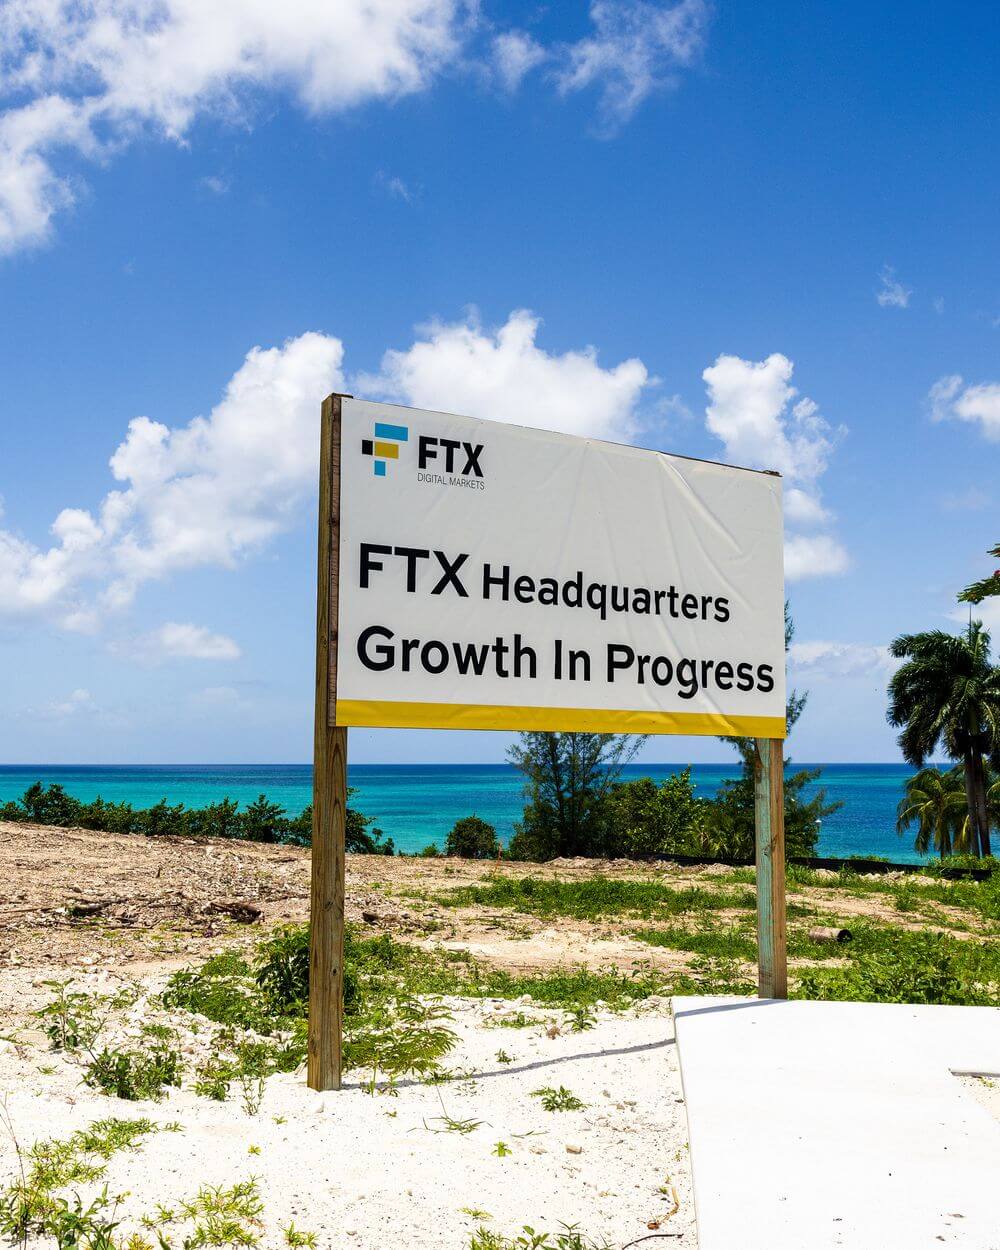 Что делал Сэм Банкман-Фрид в FTX. Заброшенная штаб-квартира FTX на Багамах. Фото.